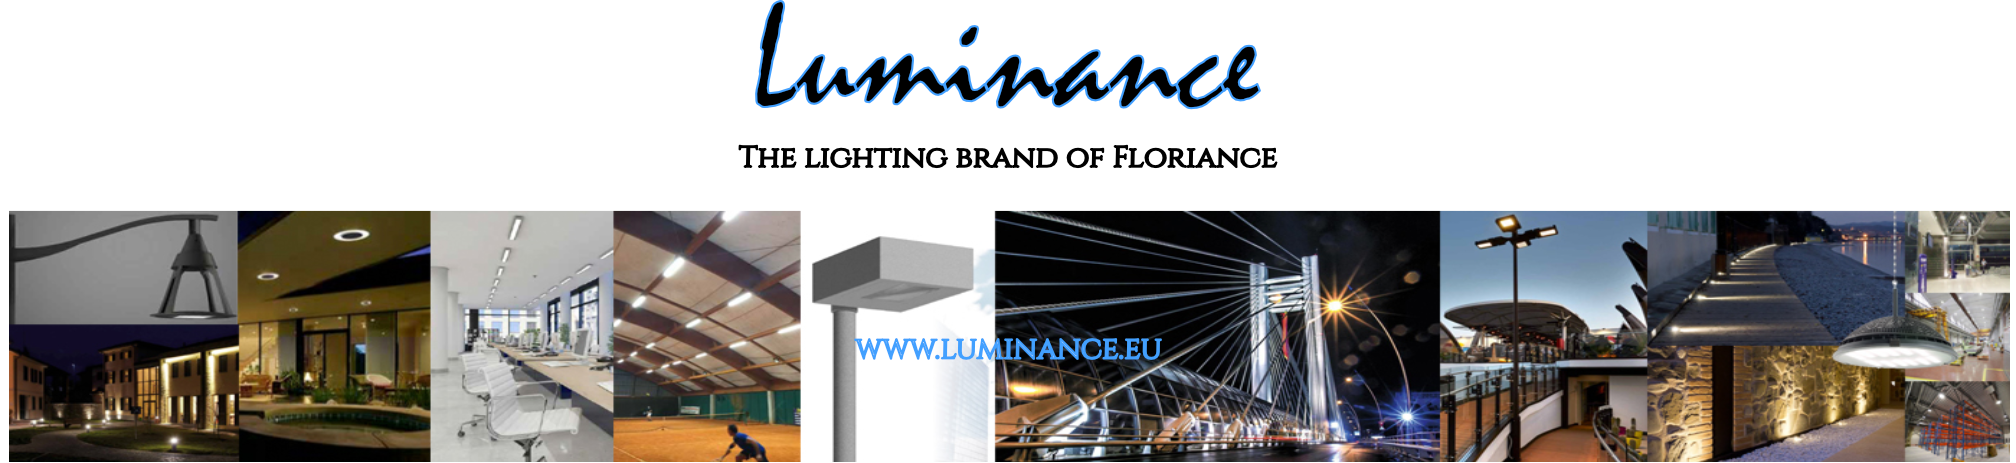 Luminance the lighting brand of Floriance